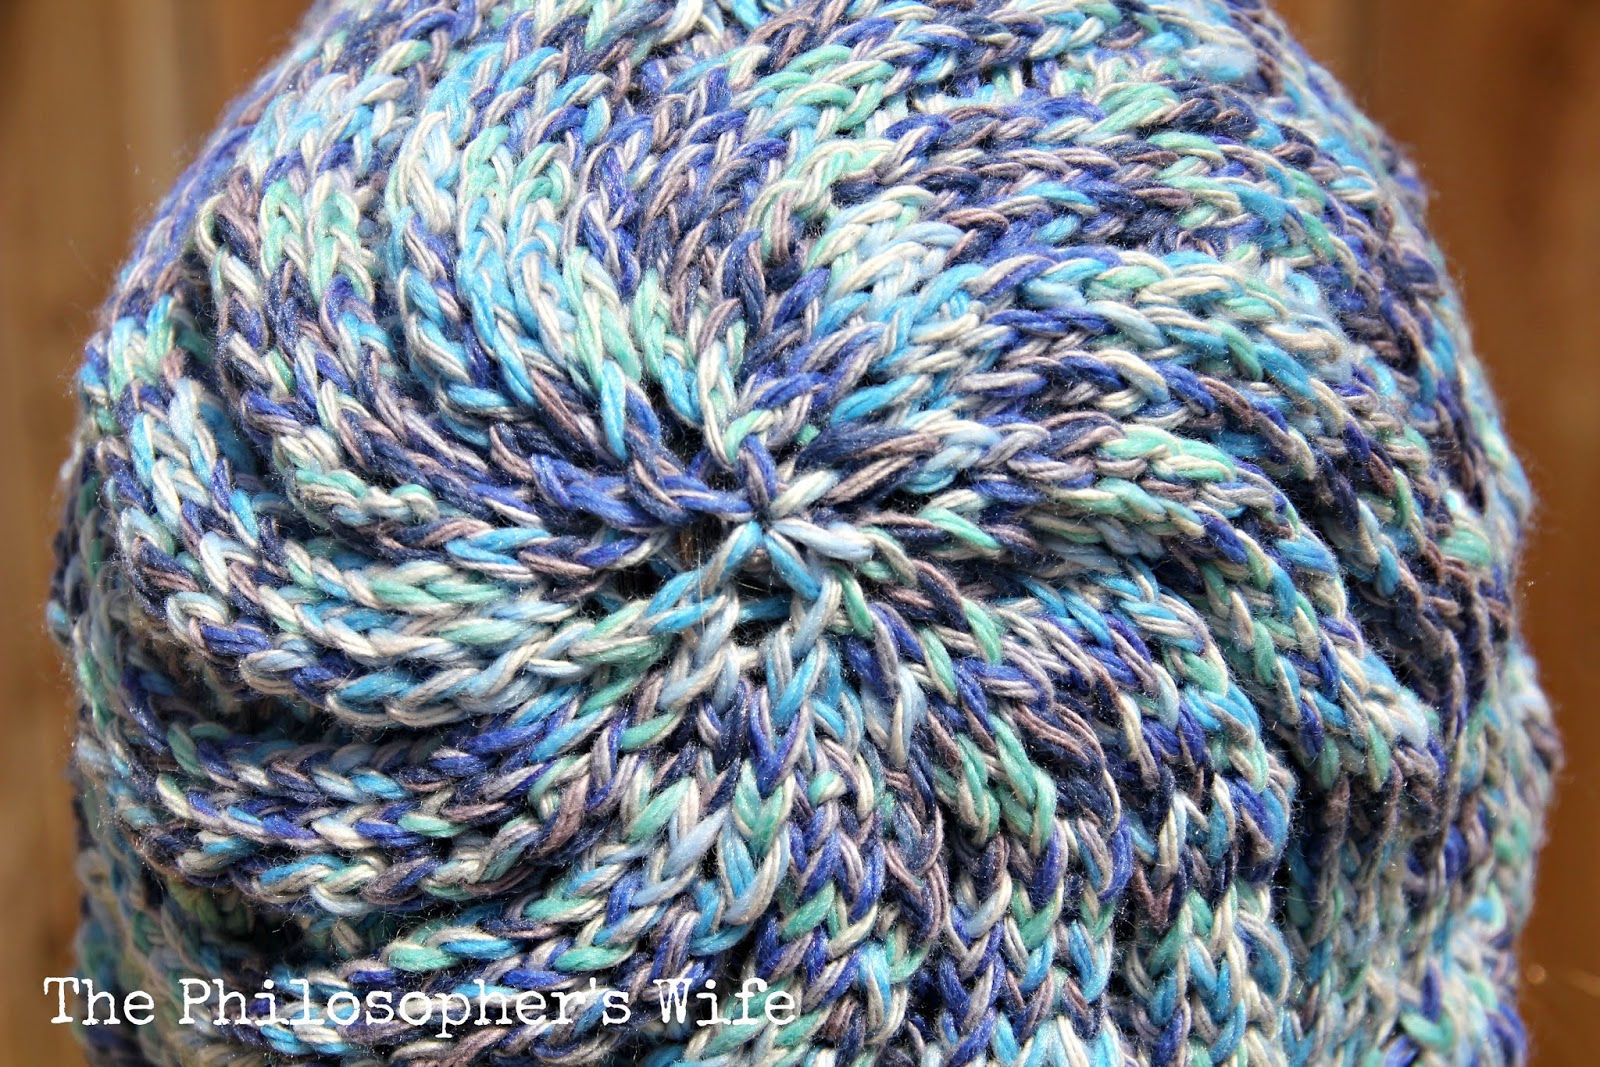 The Philosopher's Wife: A Knitting Project: Swirl Hat with Flikka Yarn